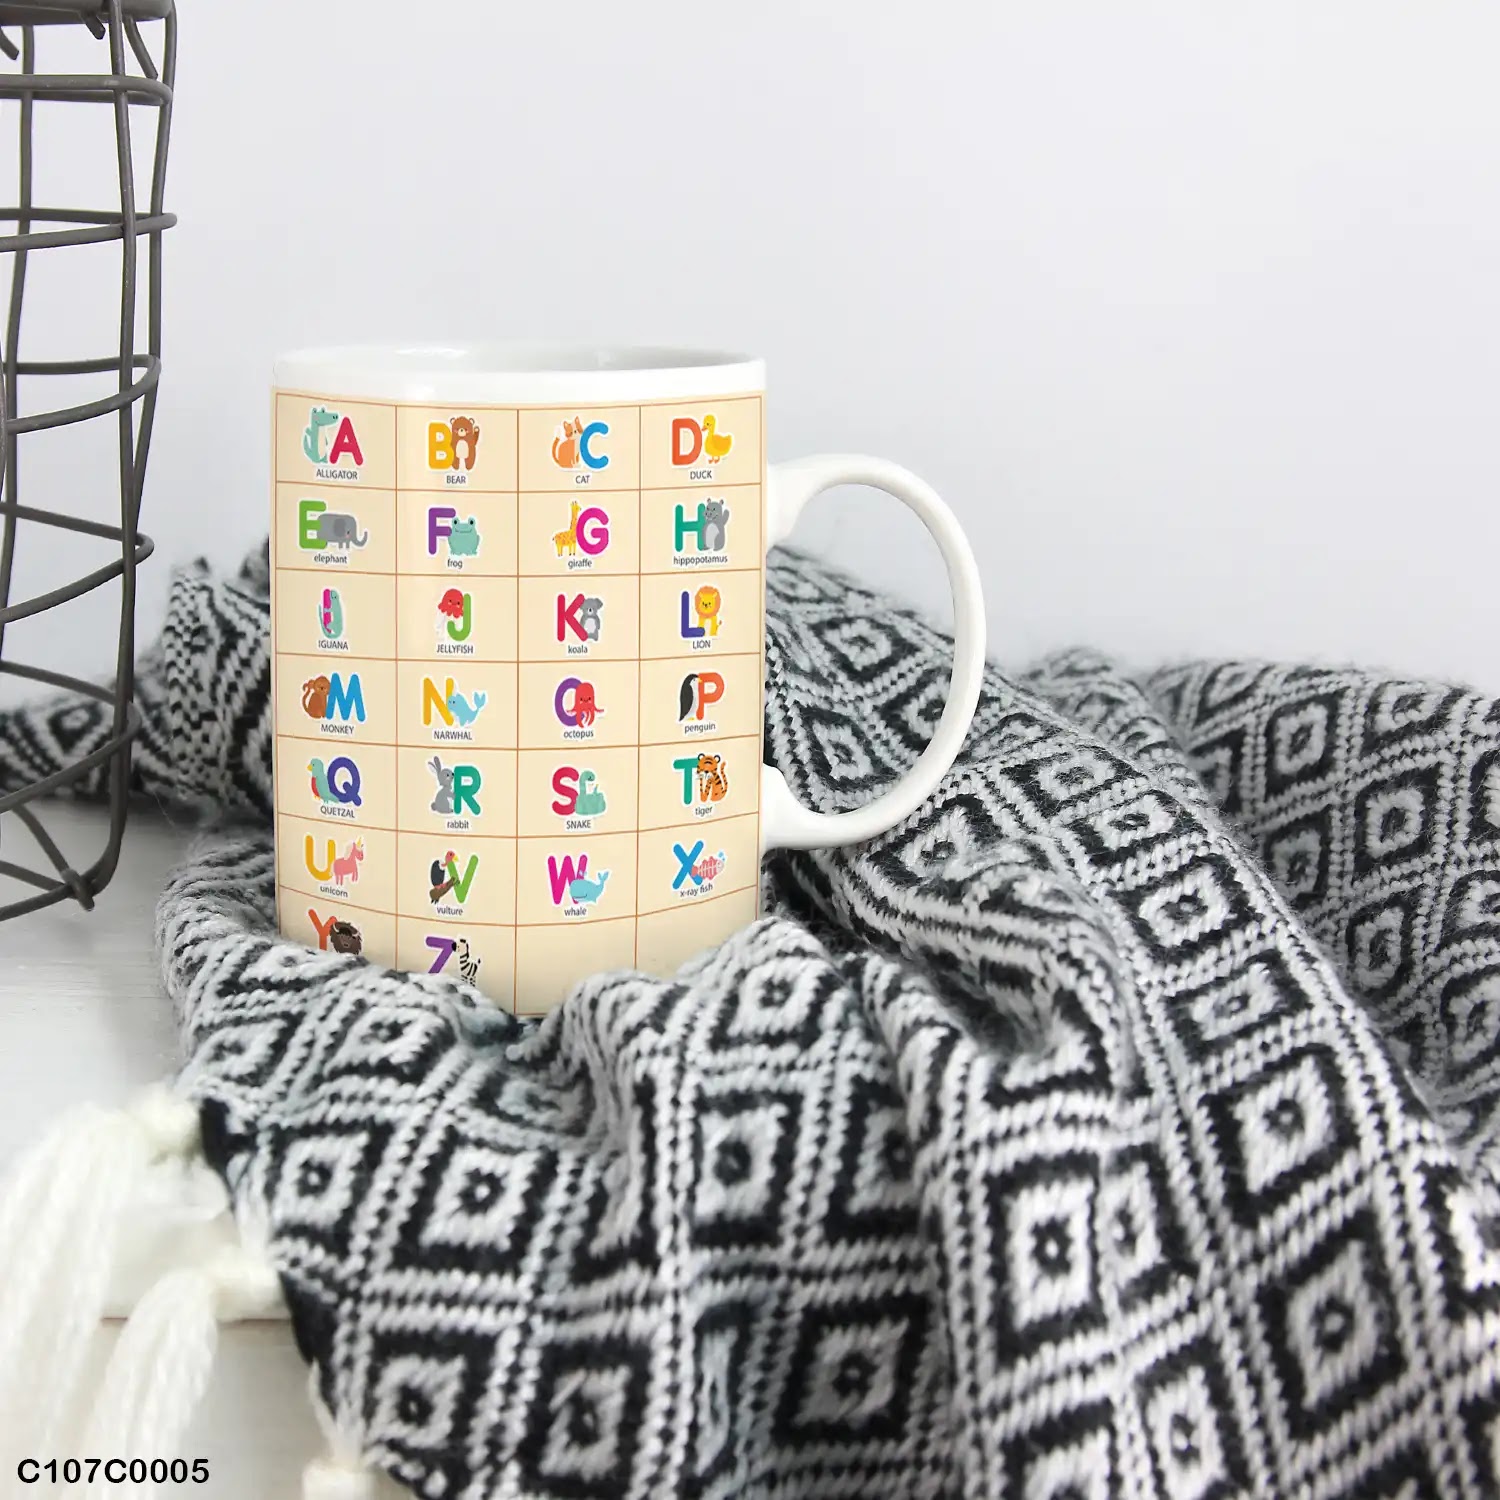 A mug (cup) printed with an English alphabet